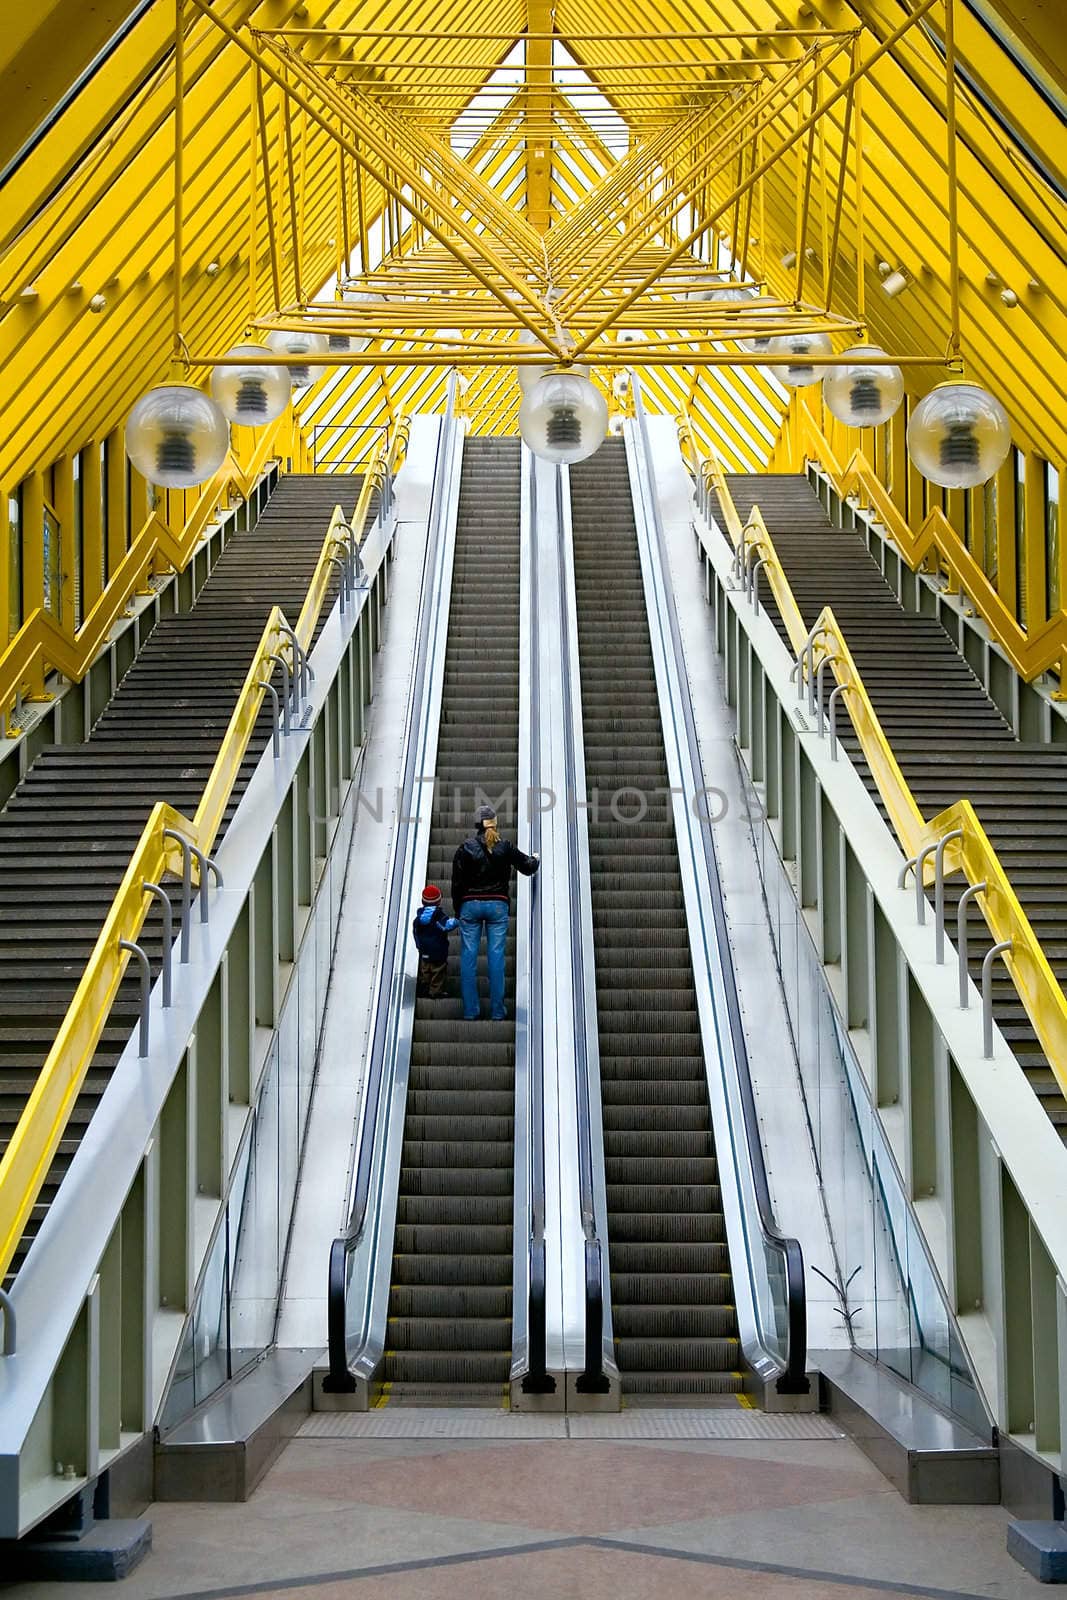 Escalator and Yellow Construction